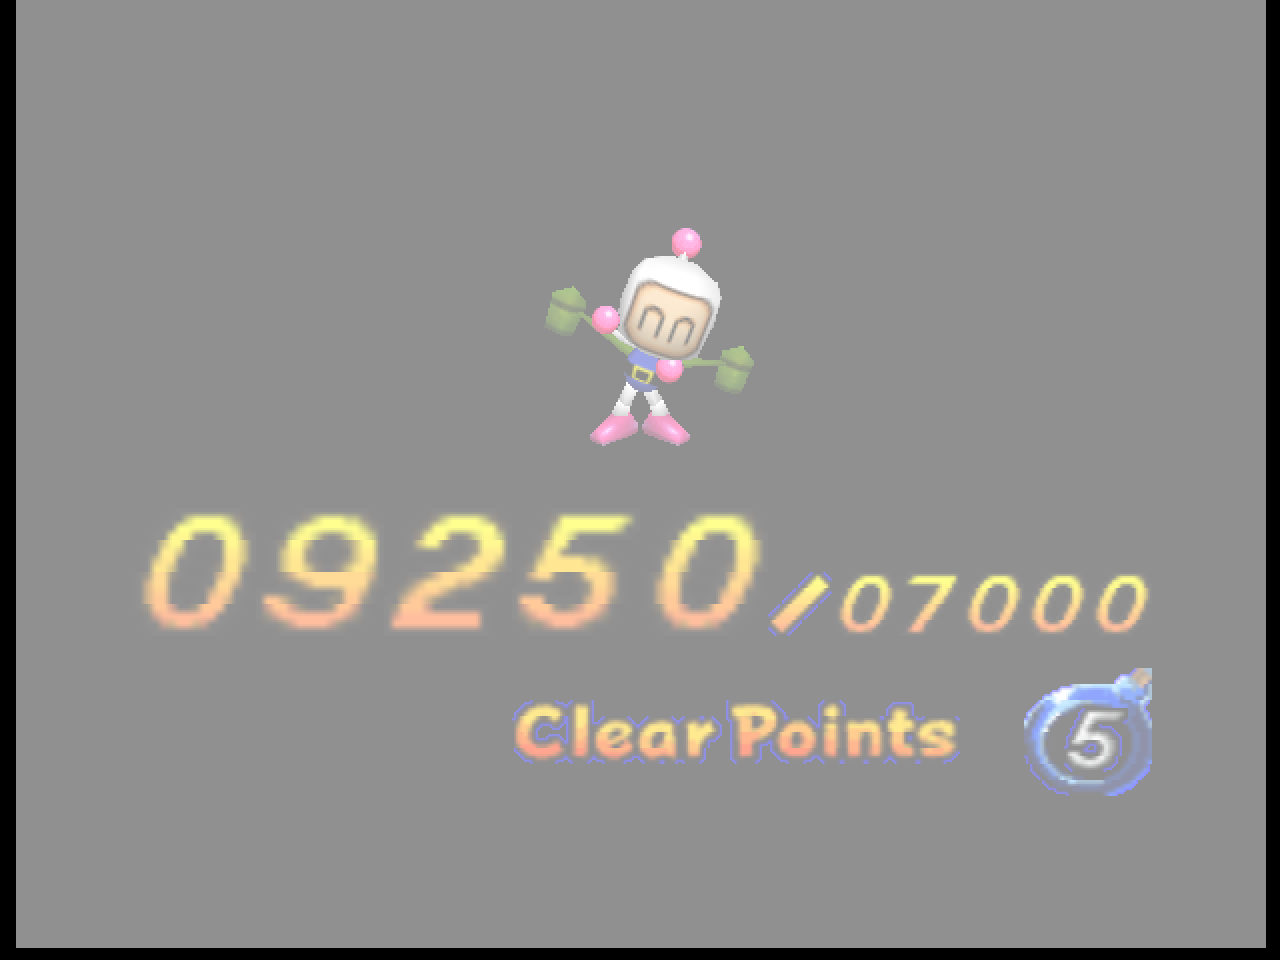 SNES - Super Bomberman 3 - Pretty Bomber - The Spriters Resource